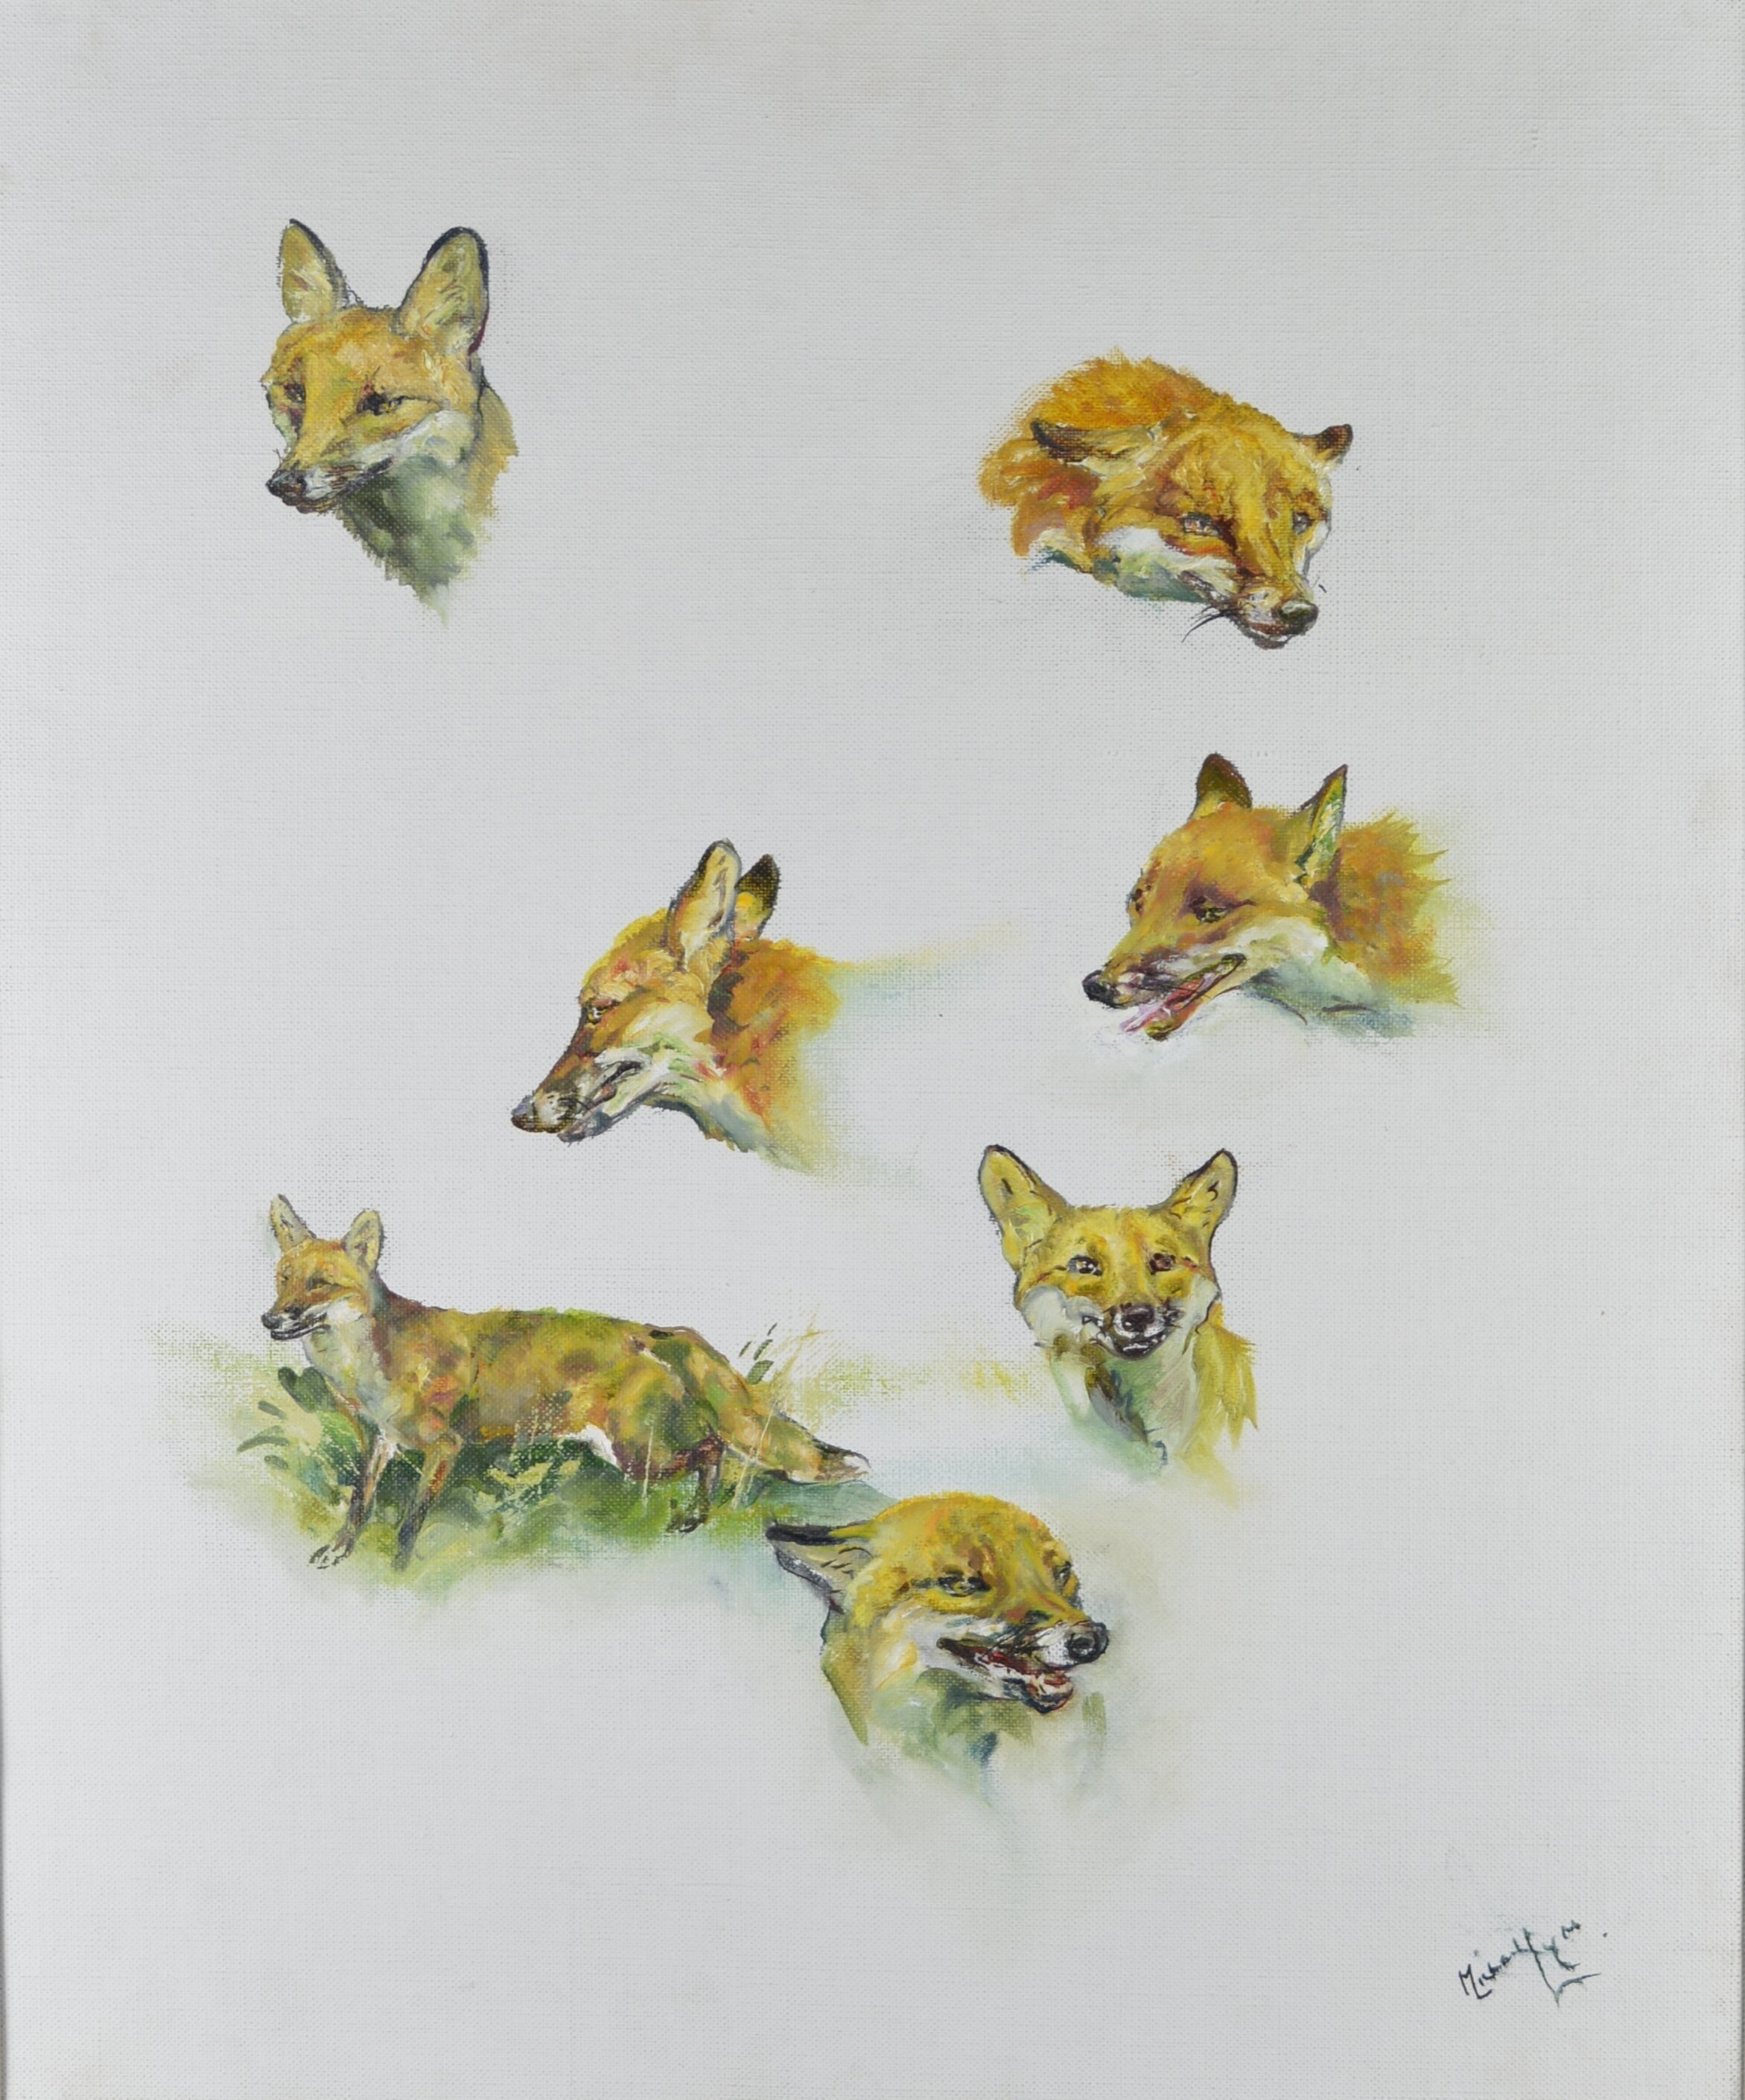 Michael Lyne, "Studies of Foxes"